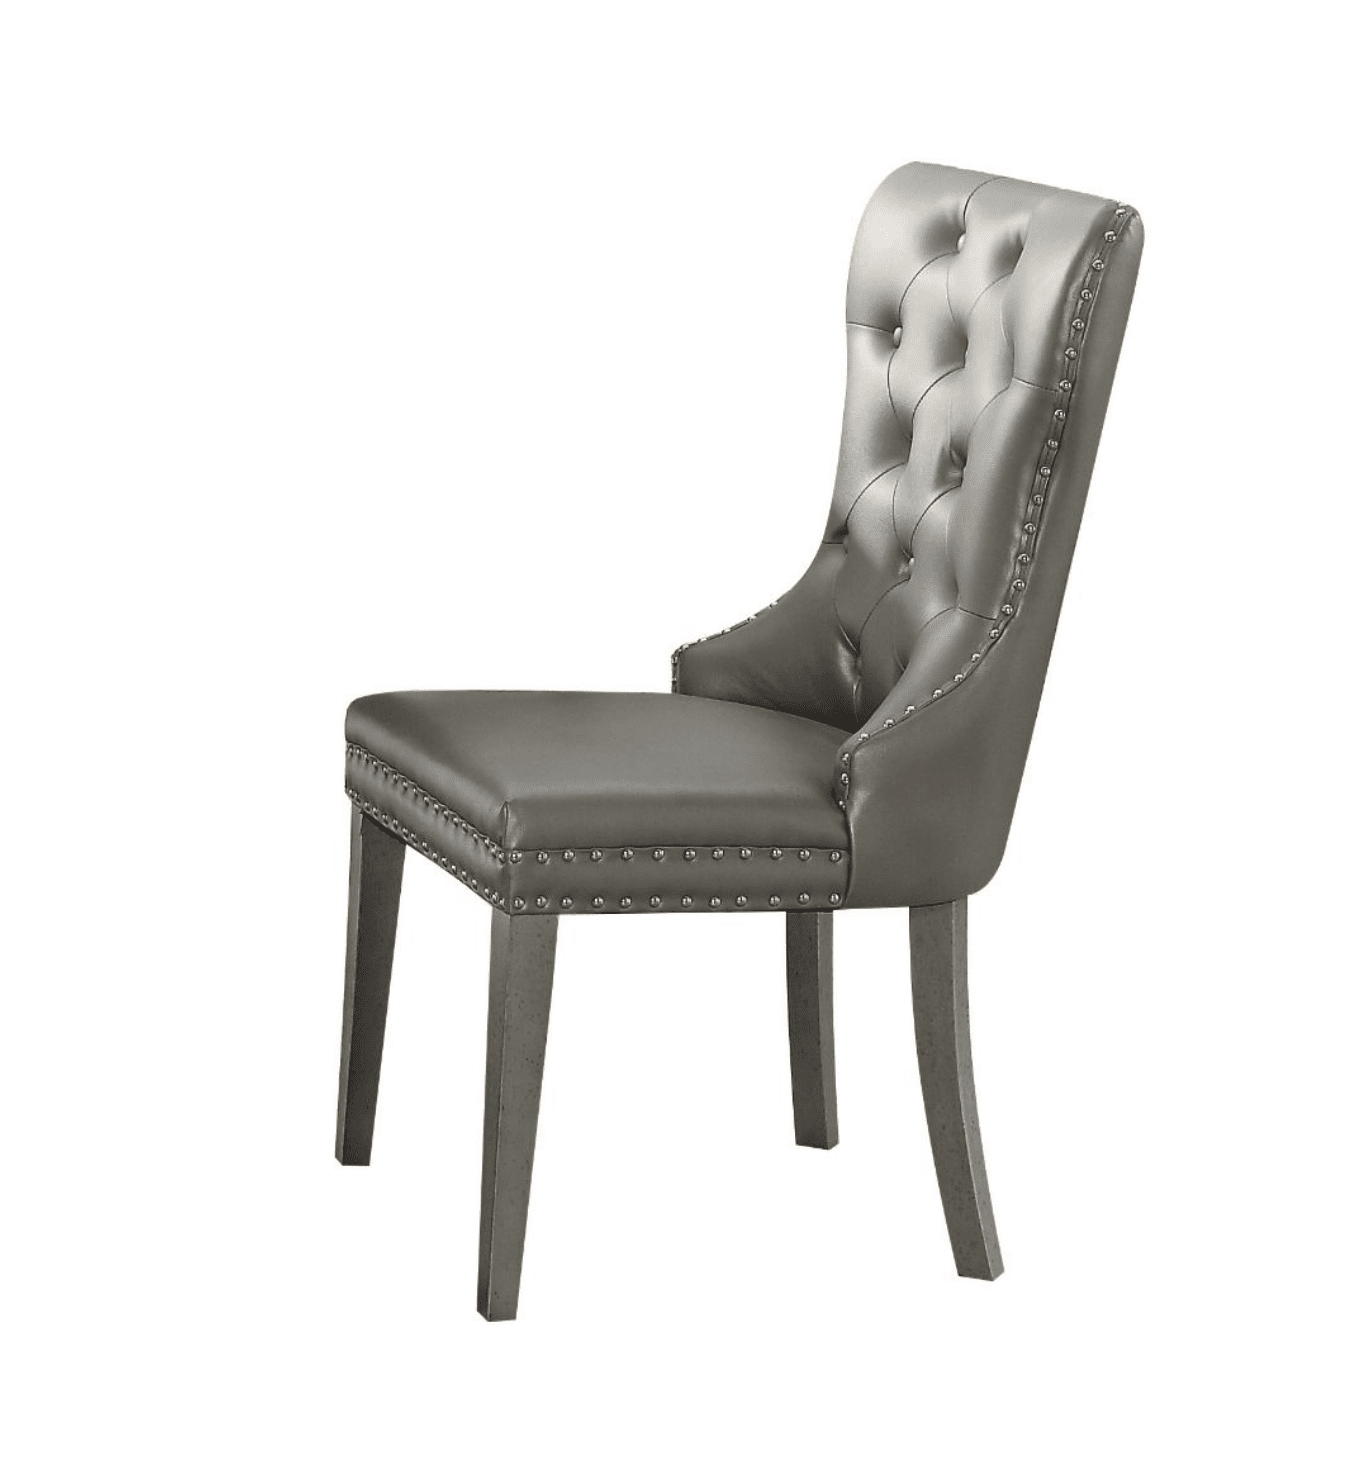 Kacela Side Chair - Set of 2 Chairs